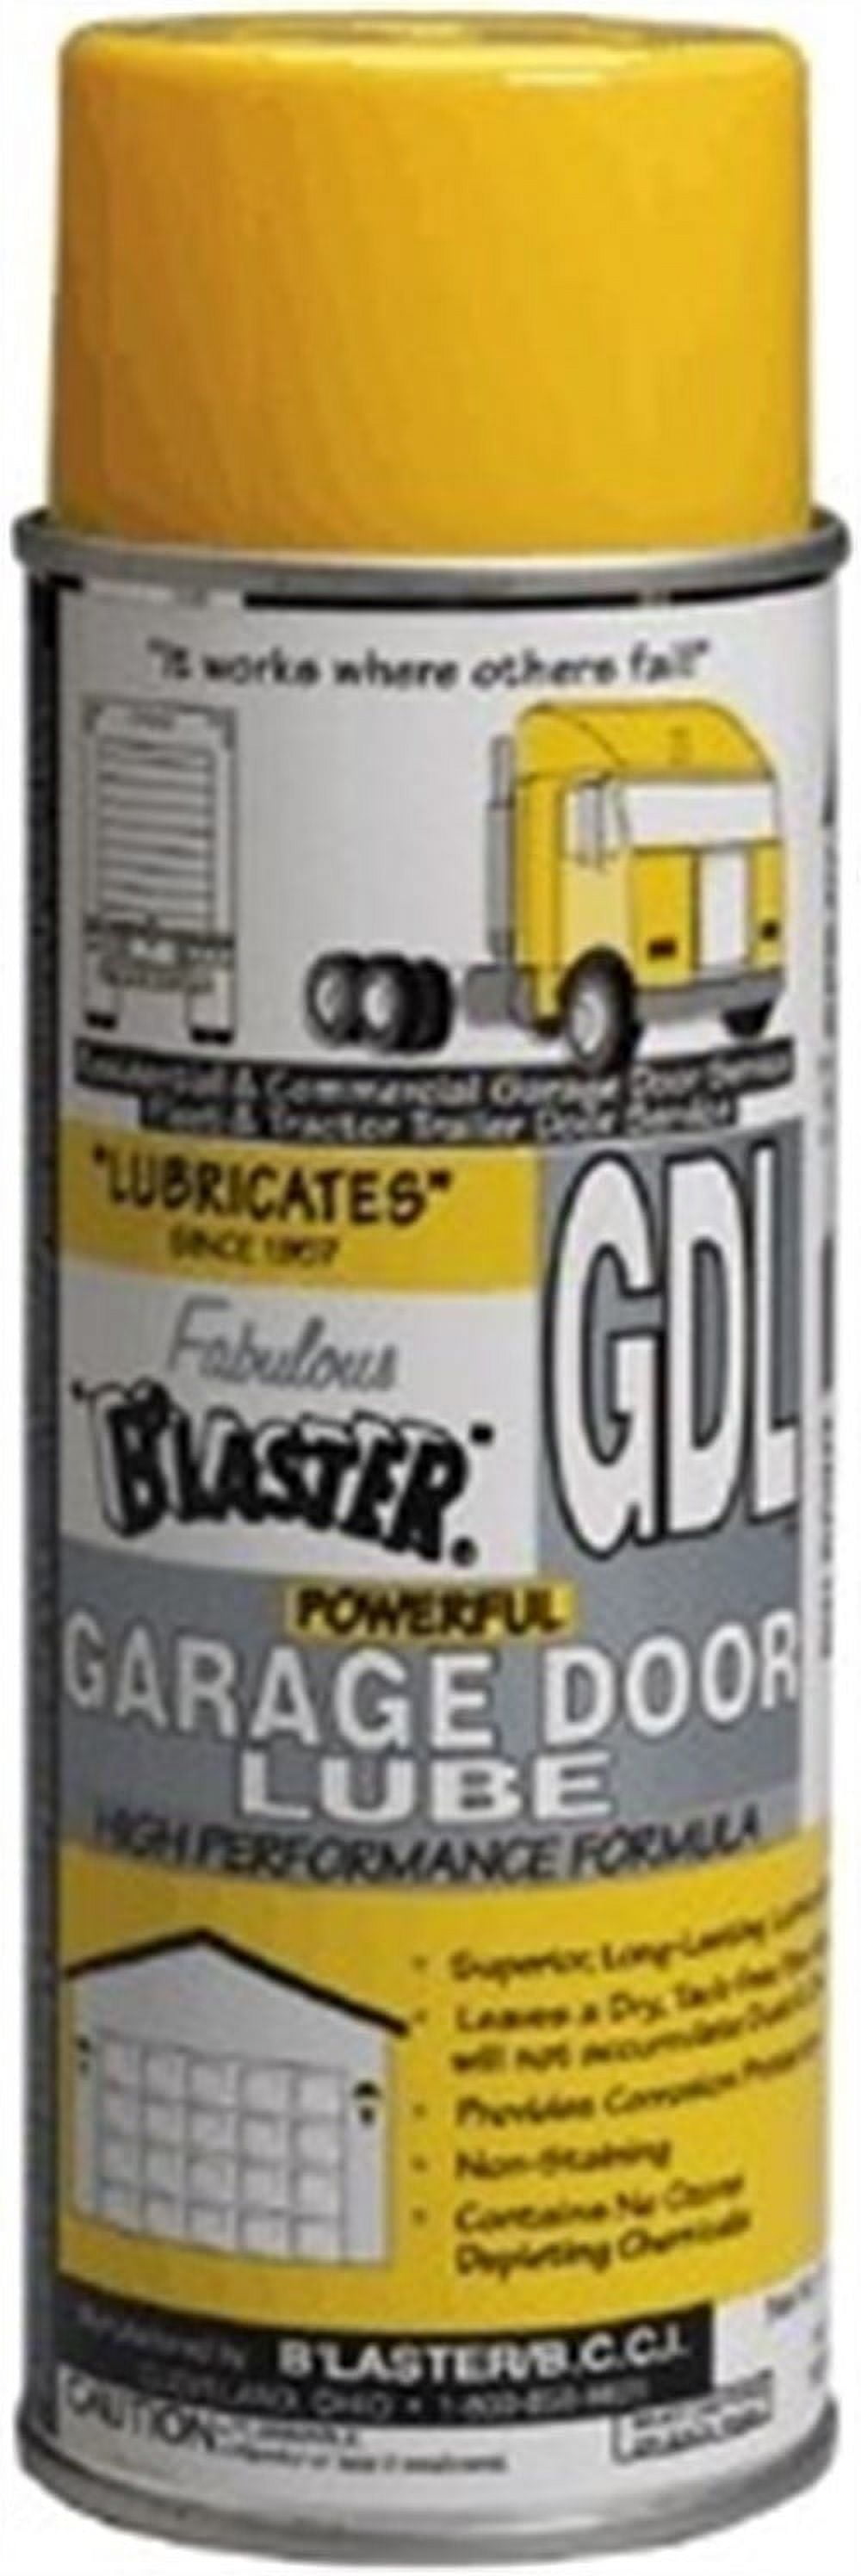 Blaster 16-GDL Premium Silicone Garage Door Lubricant Spray - 9.3-Ounces